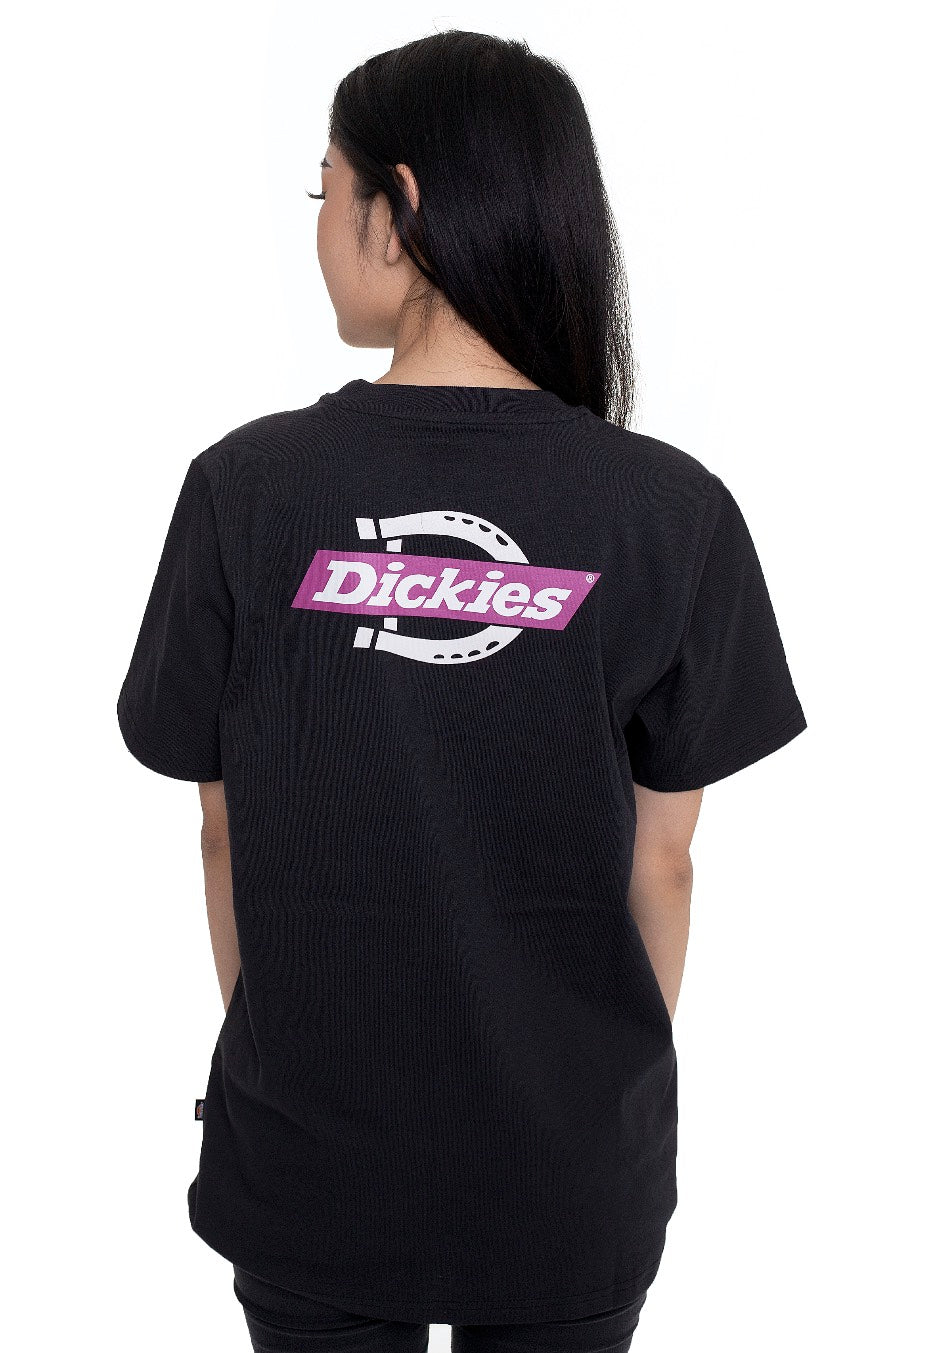 Dickies - Ruston Black - T-Shirt